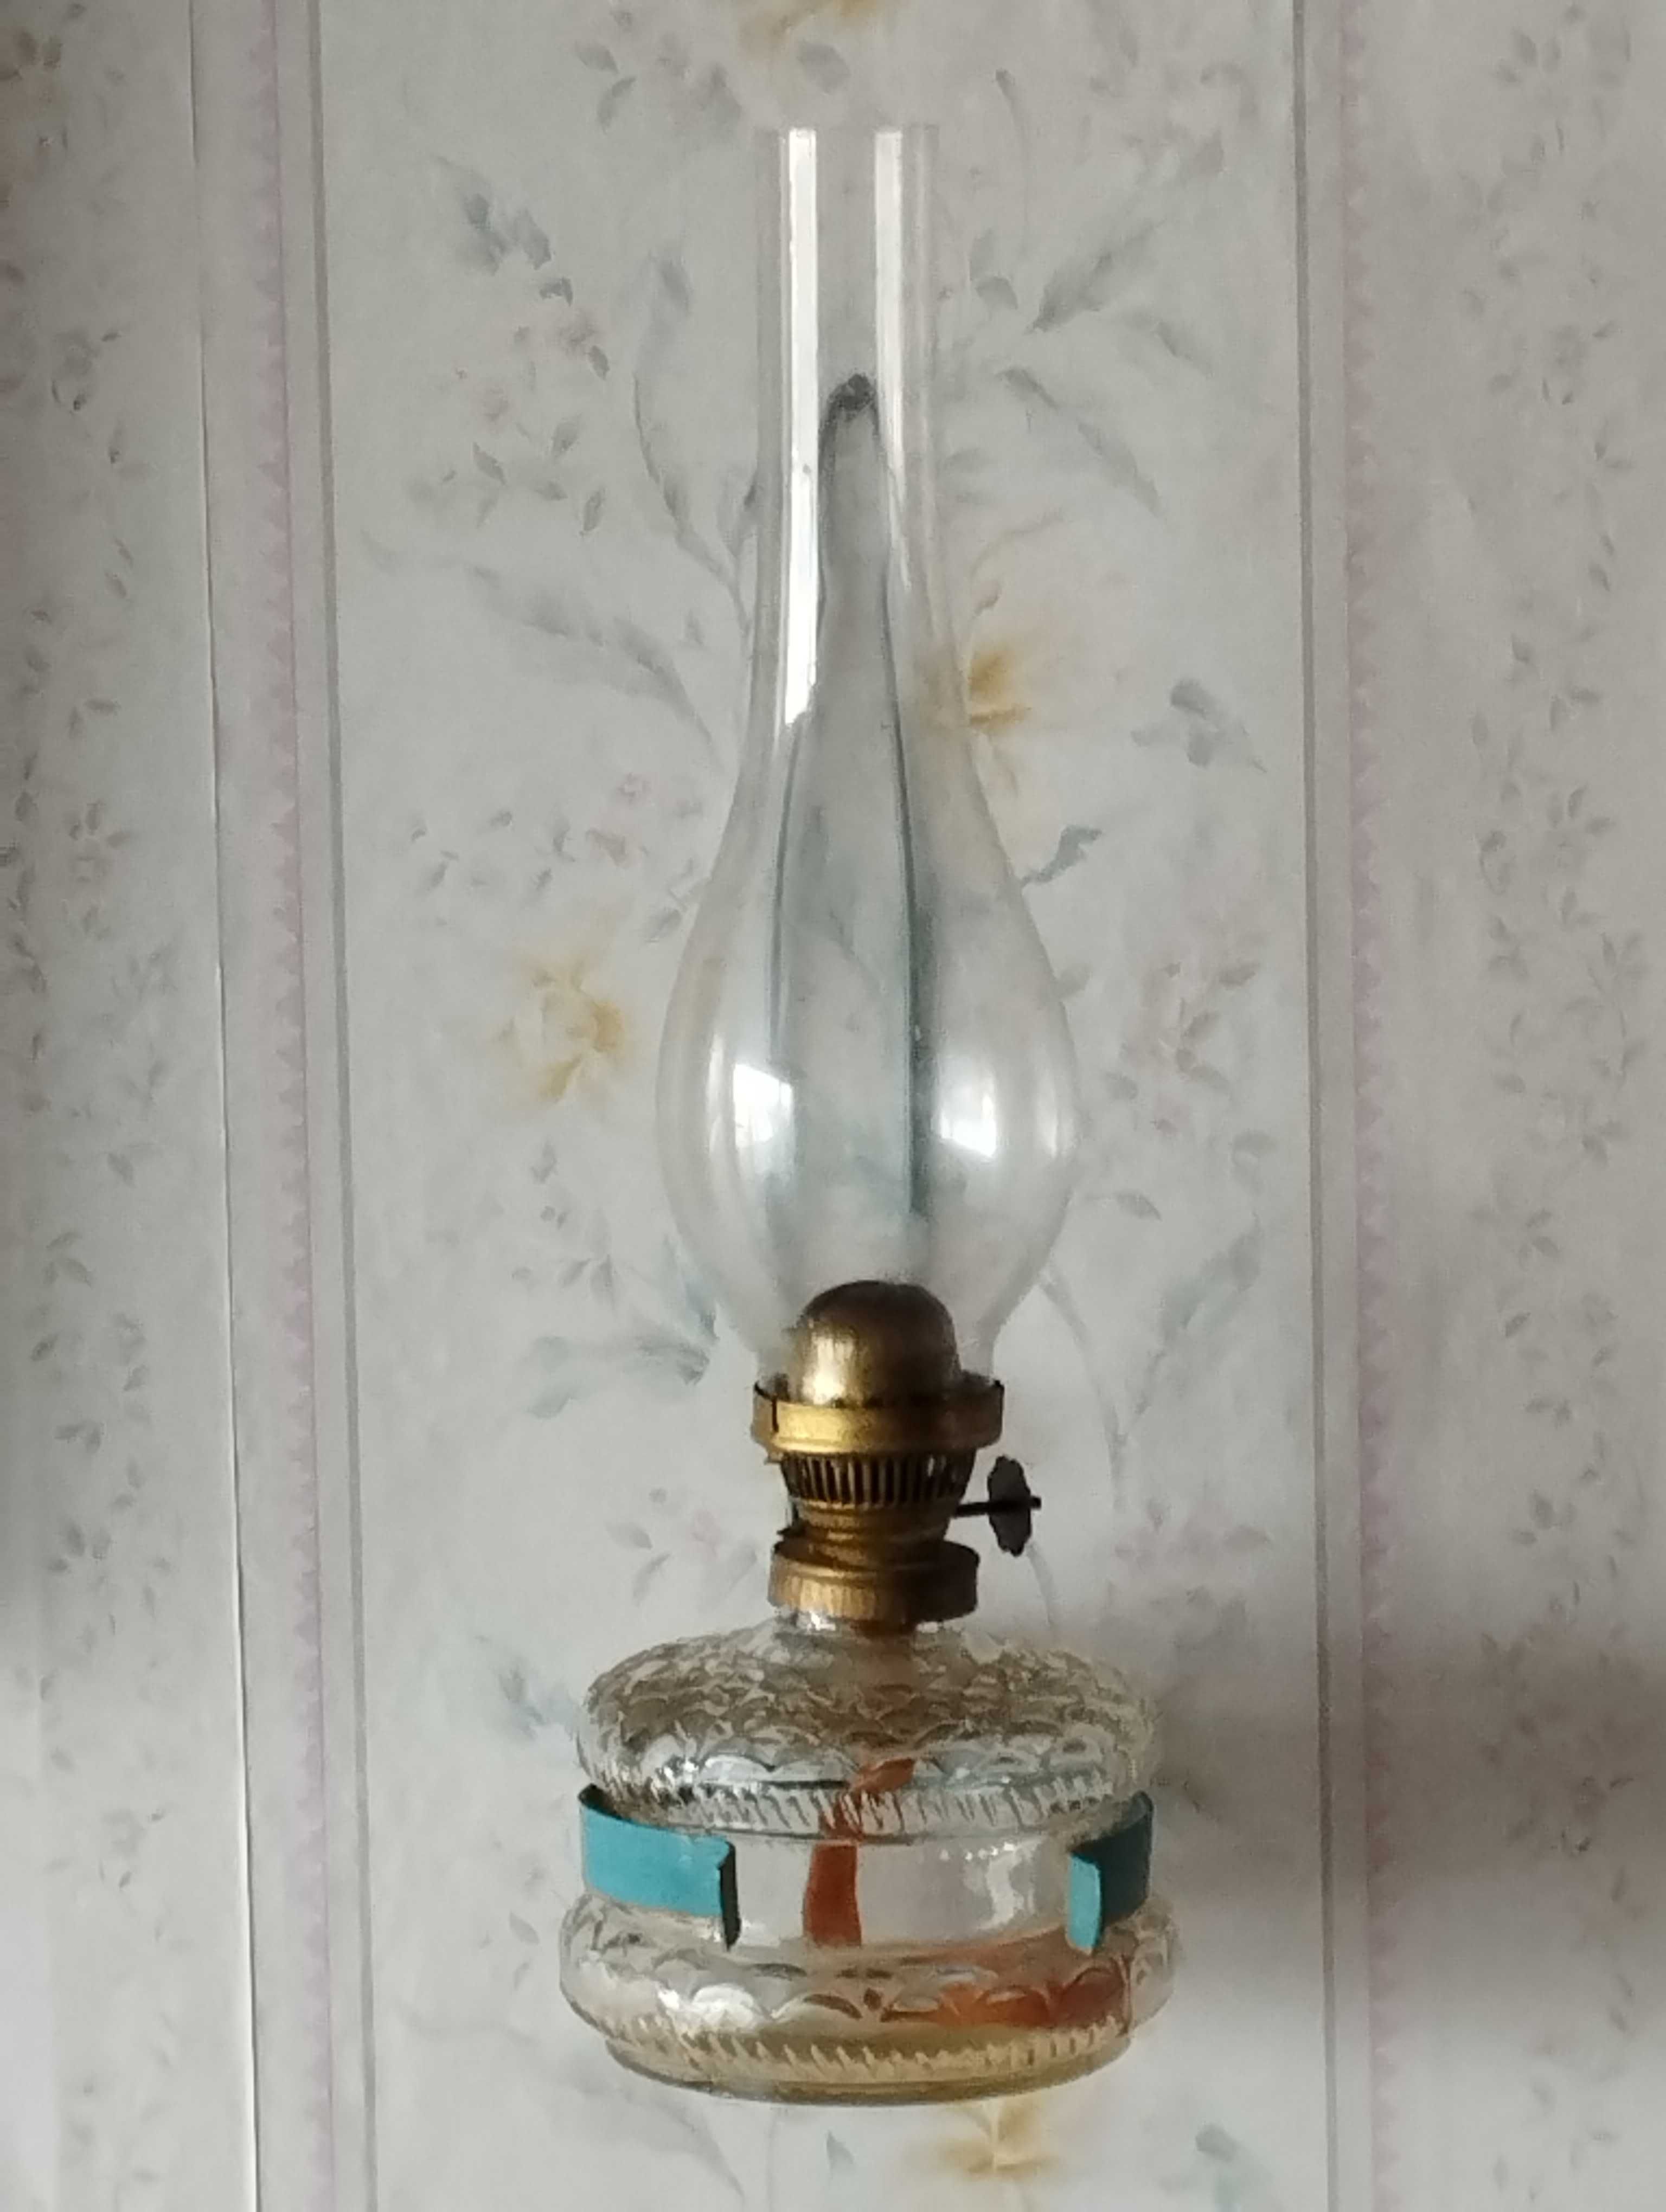 Настолна нощна лампа от Соца-месингова основа.Стара газена лампа.